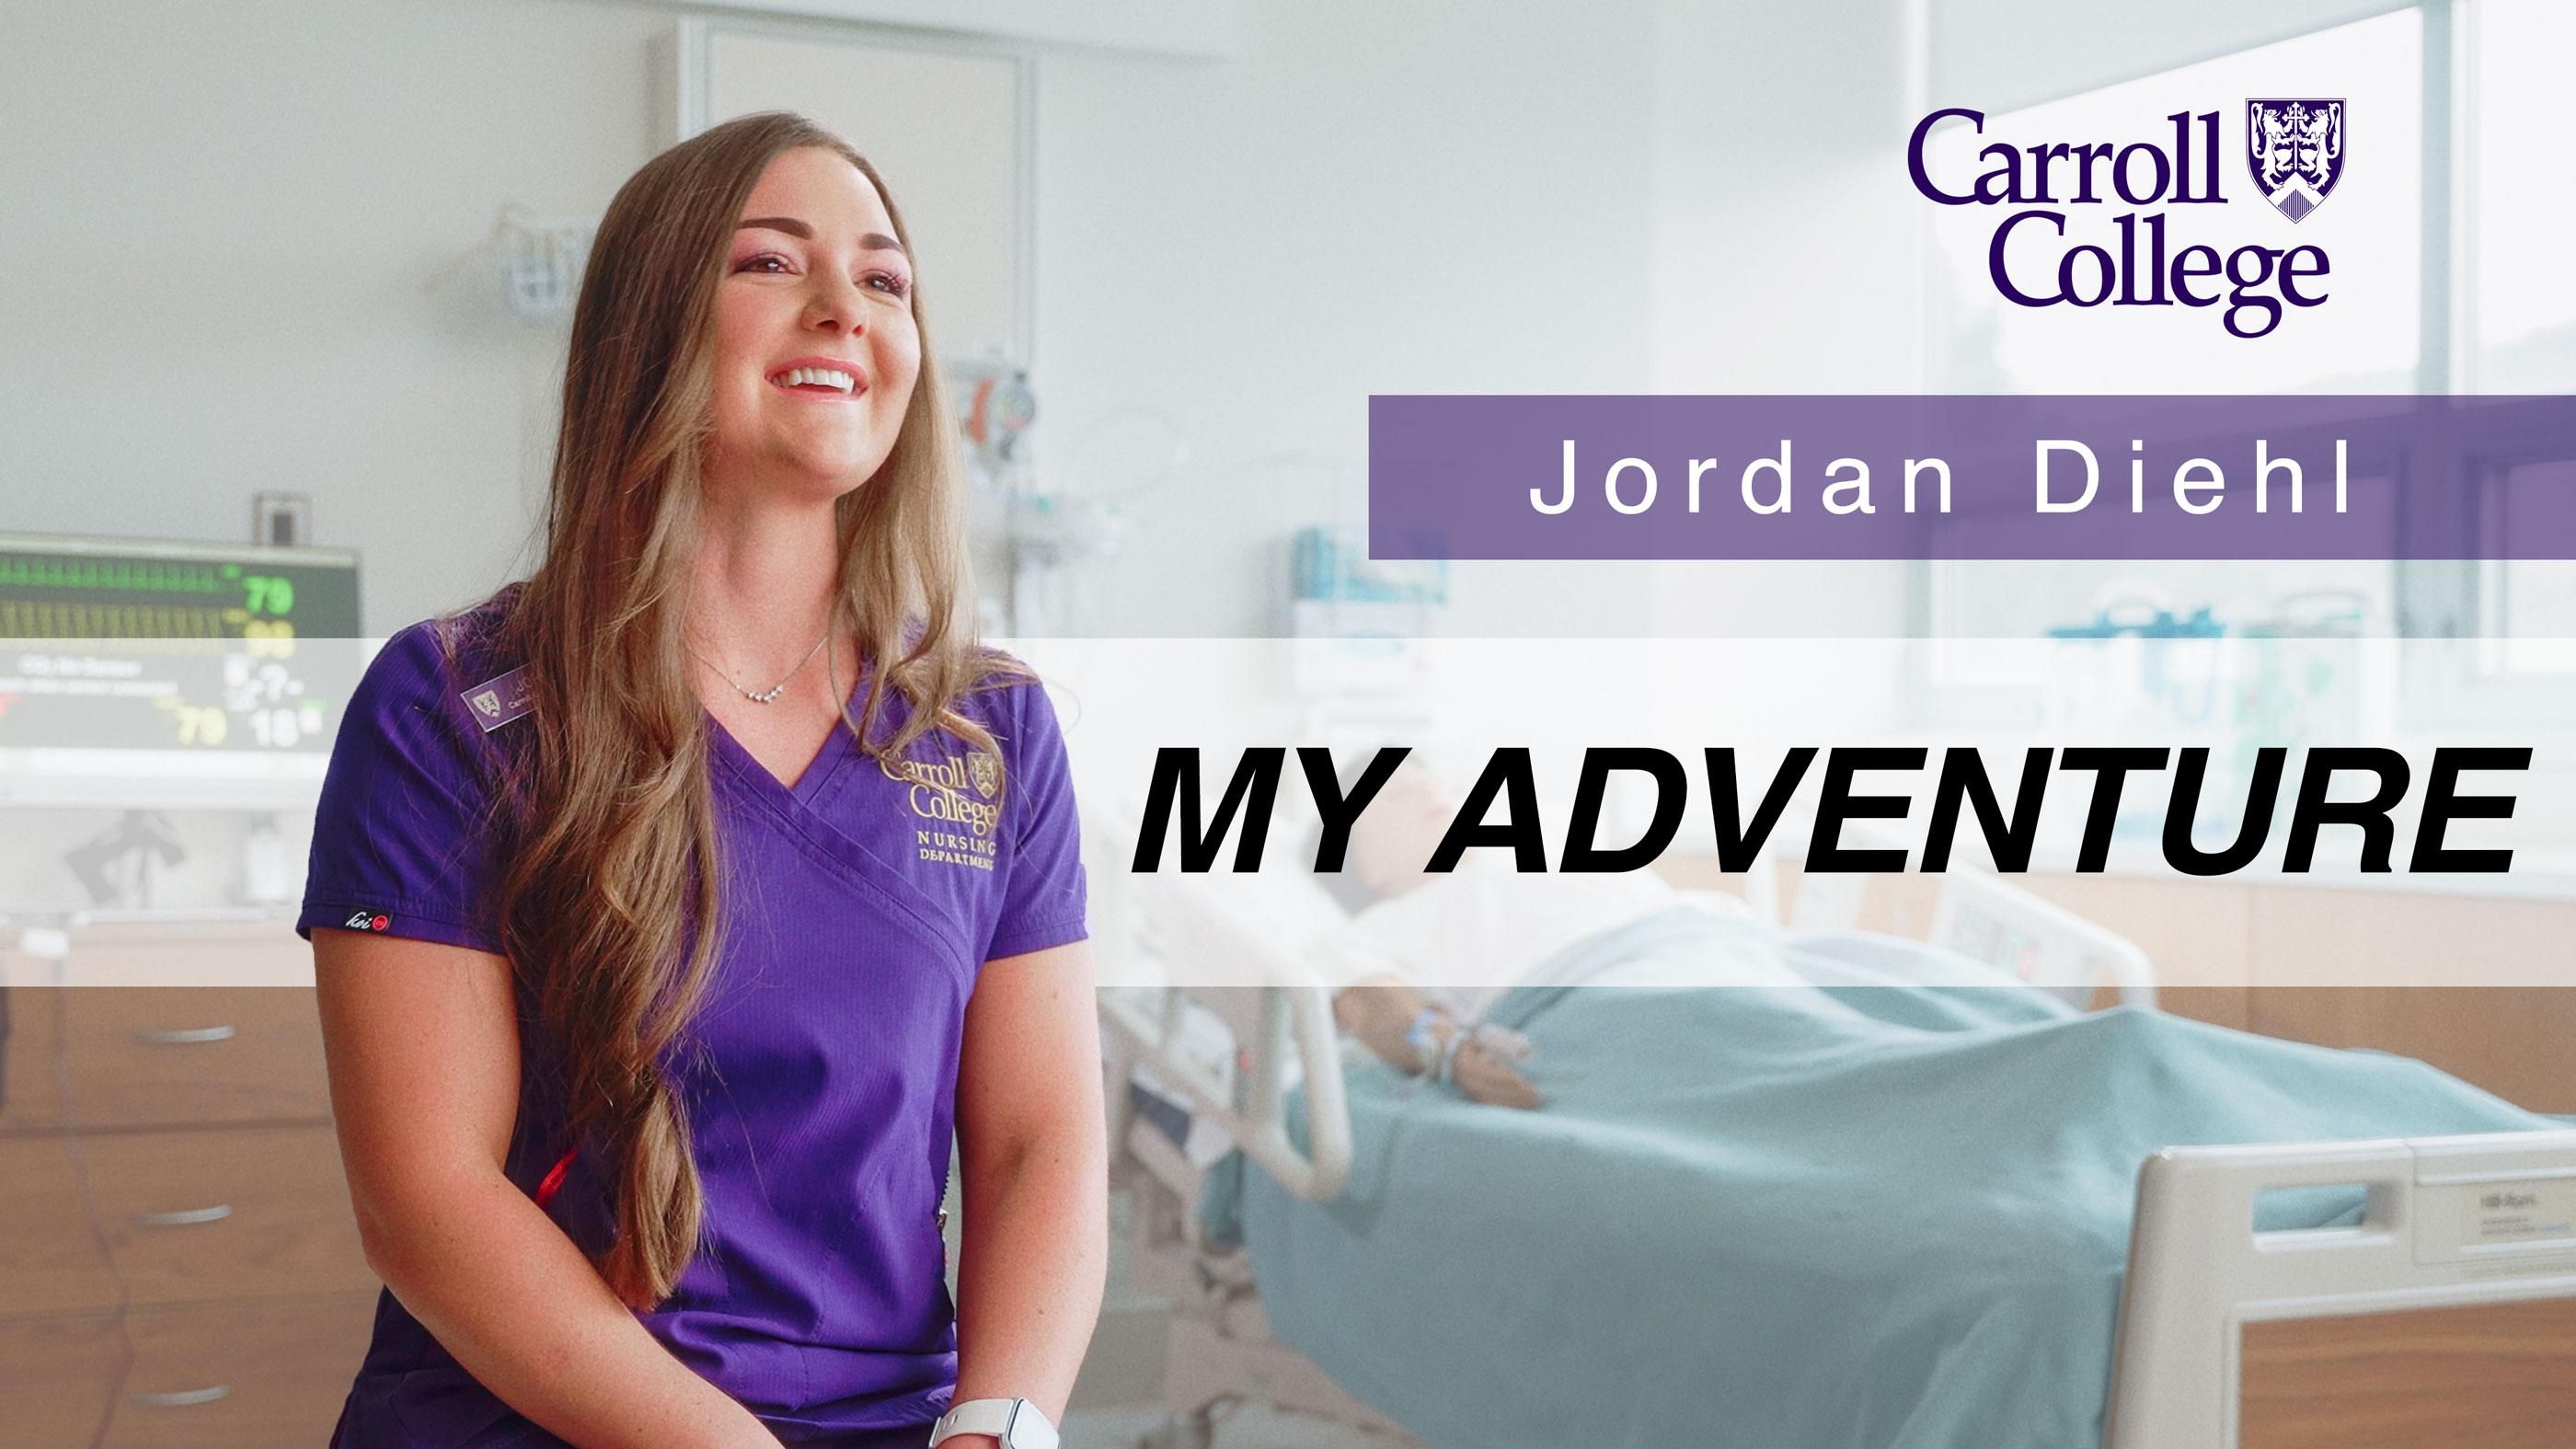 2022 Carroll College graduate Jordan Diehl shares her journey from Carroll College Nursing major to ICU Float Nurse at The Johns Hopkins Hospital.